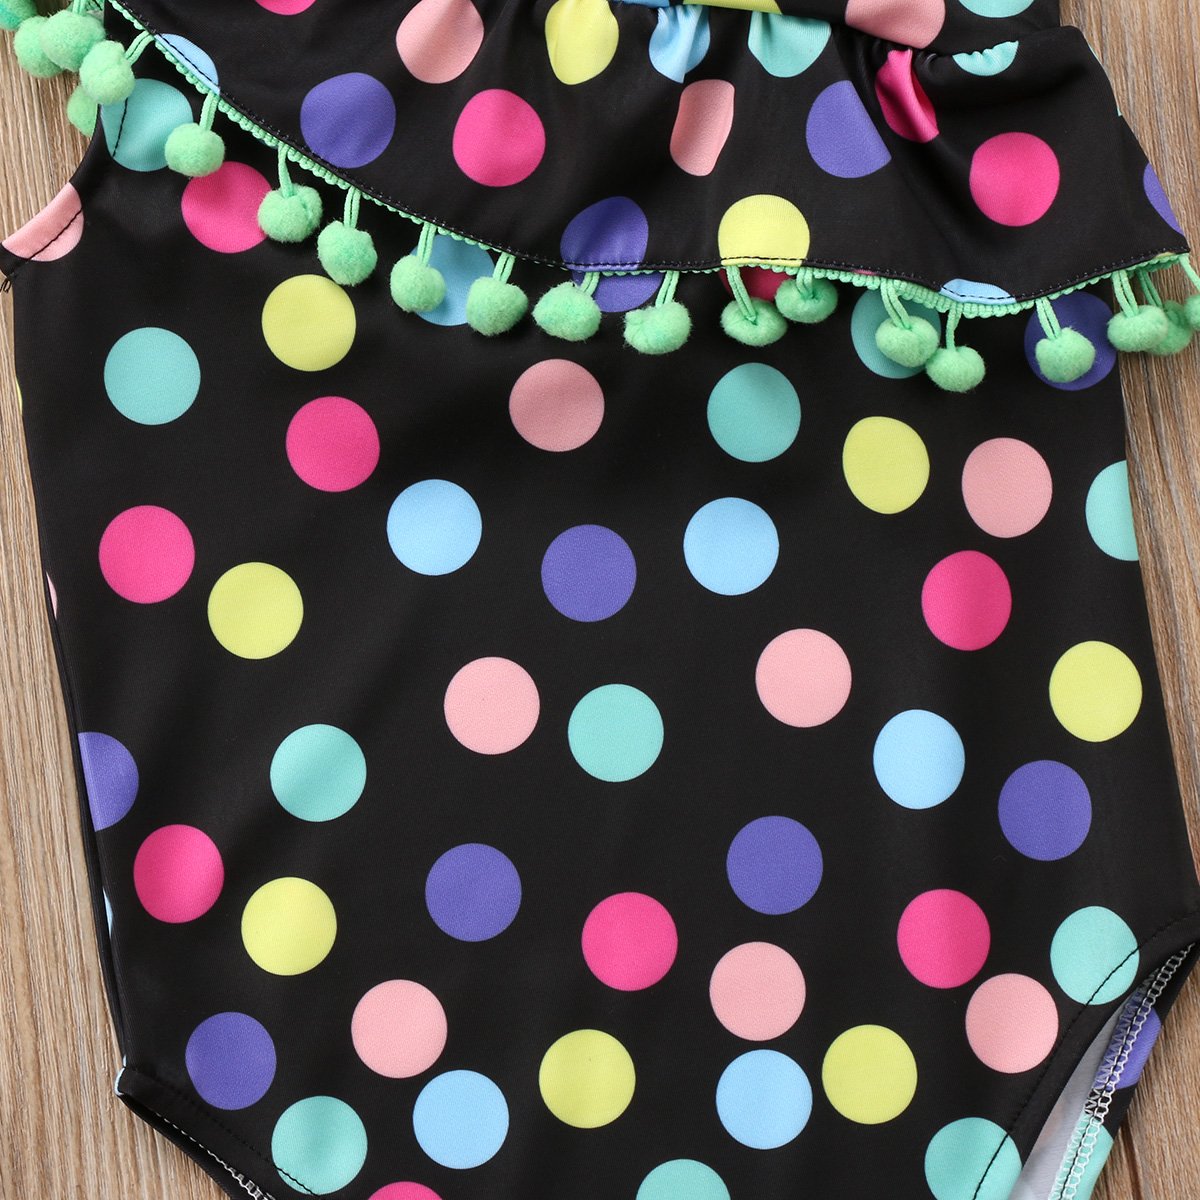 Girl Disco Dots Swimwear Set